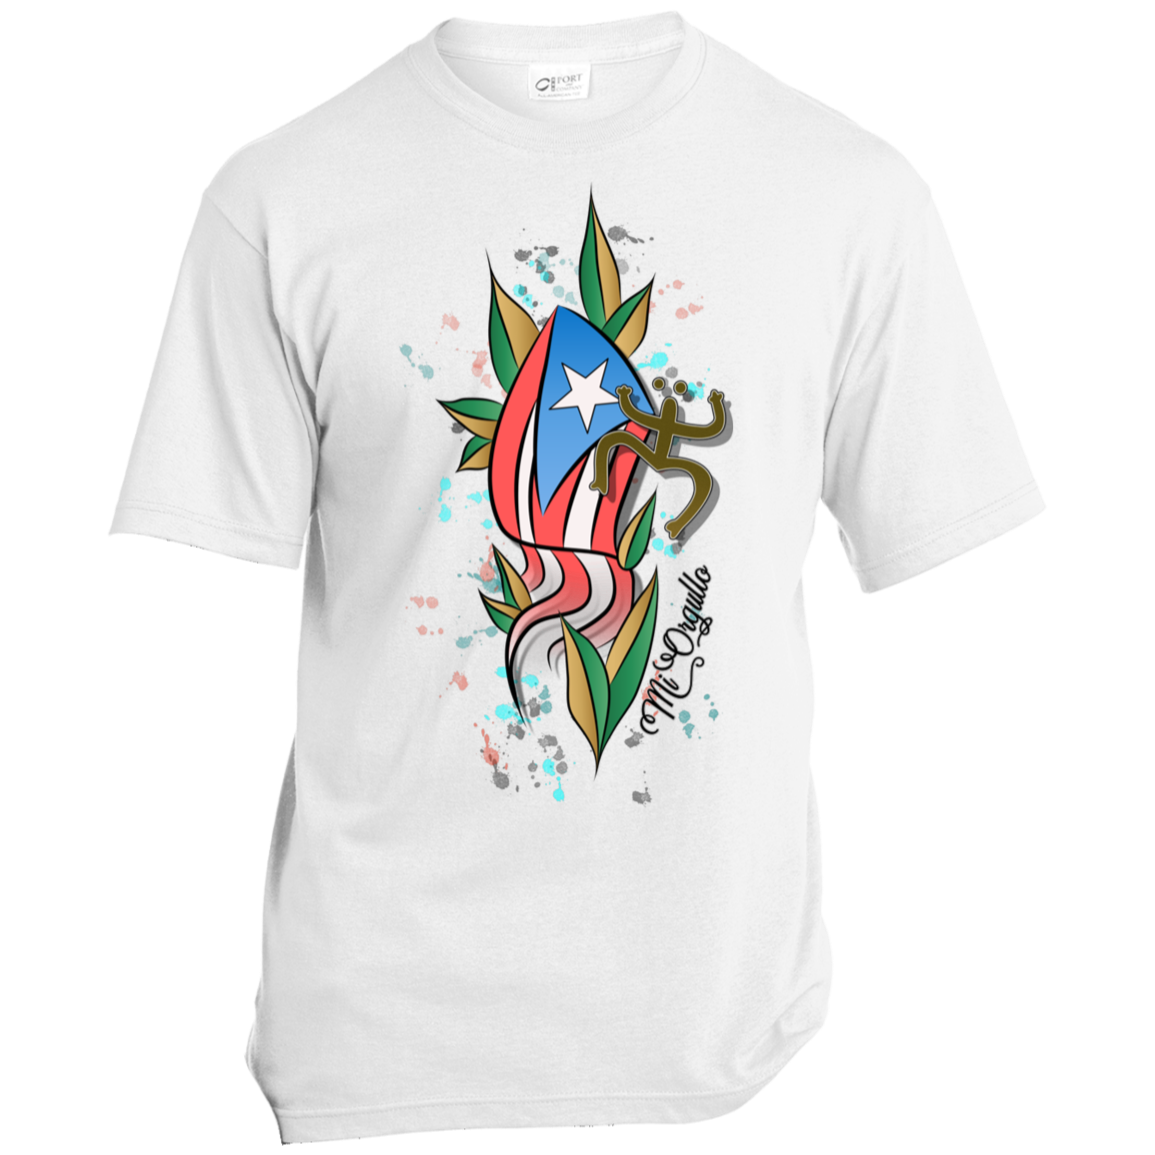 Artistic Mi Orgullo USA Made Unisex T-Shirt - Puerto Rican Pride